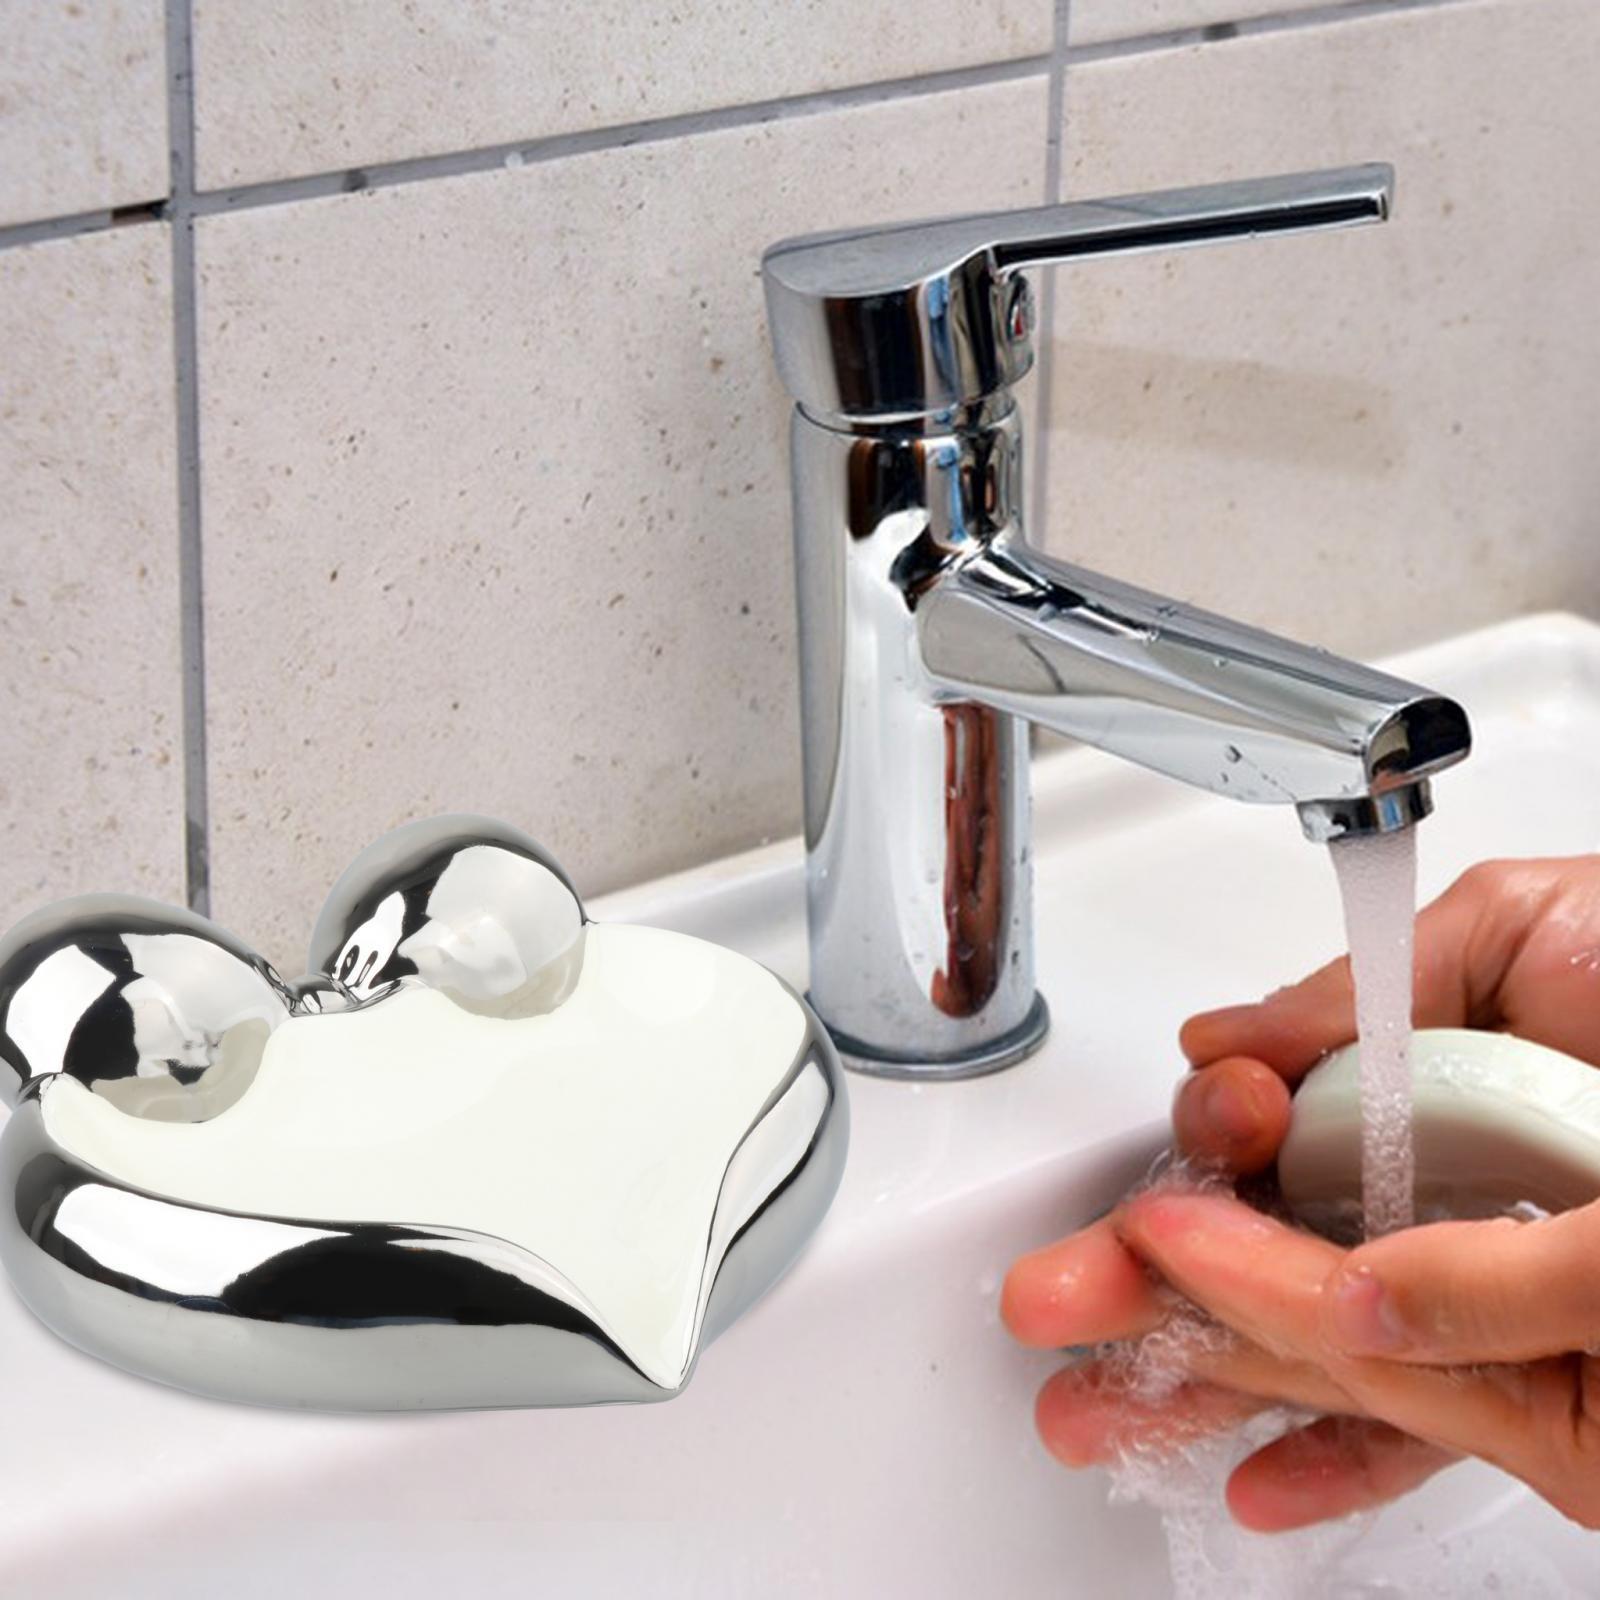 Ceramic Soap Dish Self Draining Soap Holder Soap Box for Bathroom Countertop